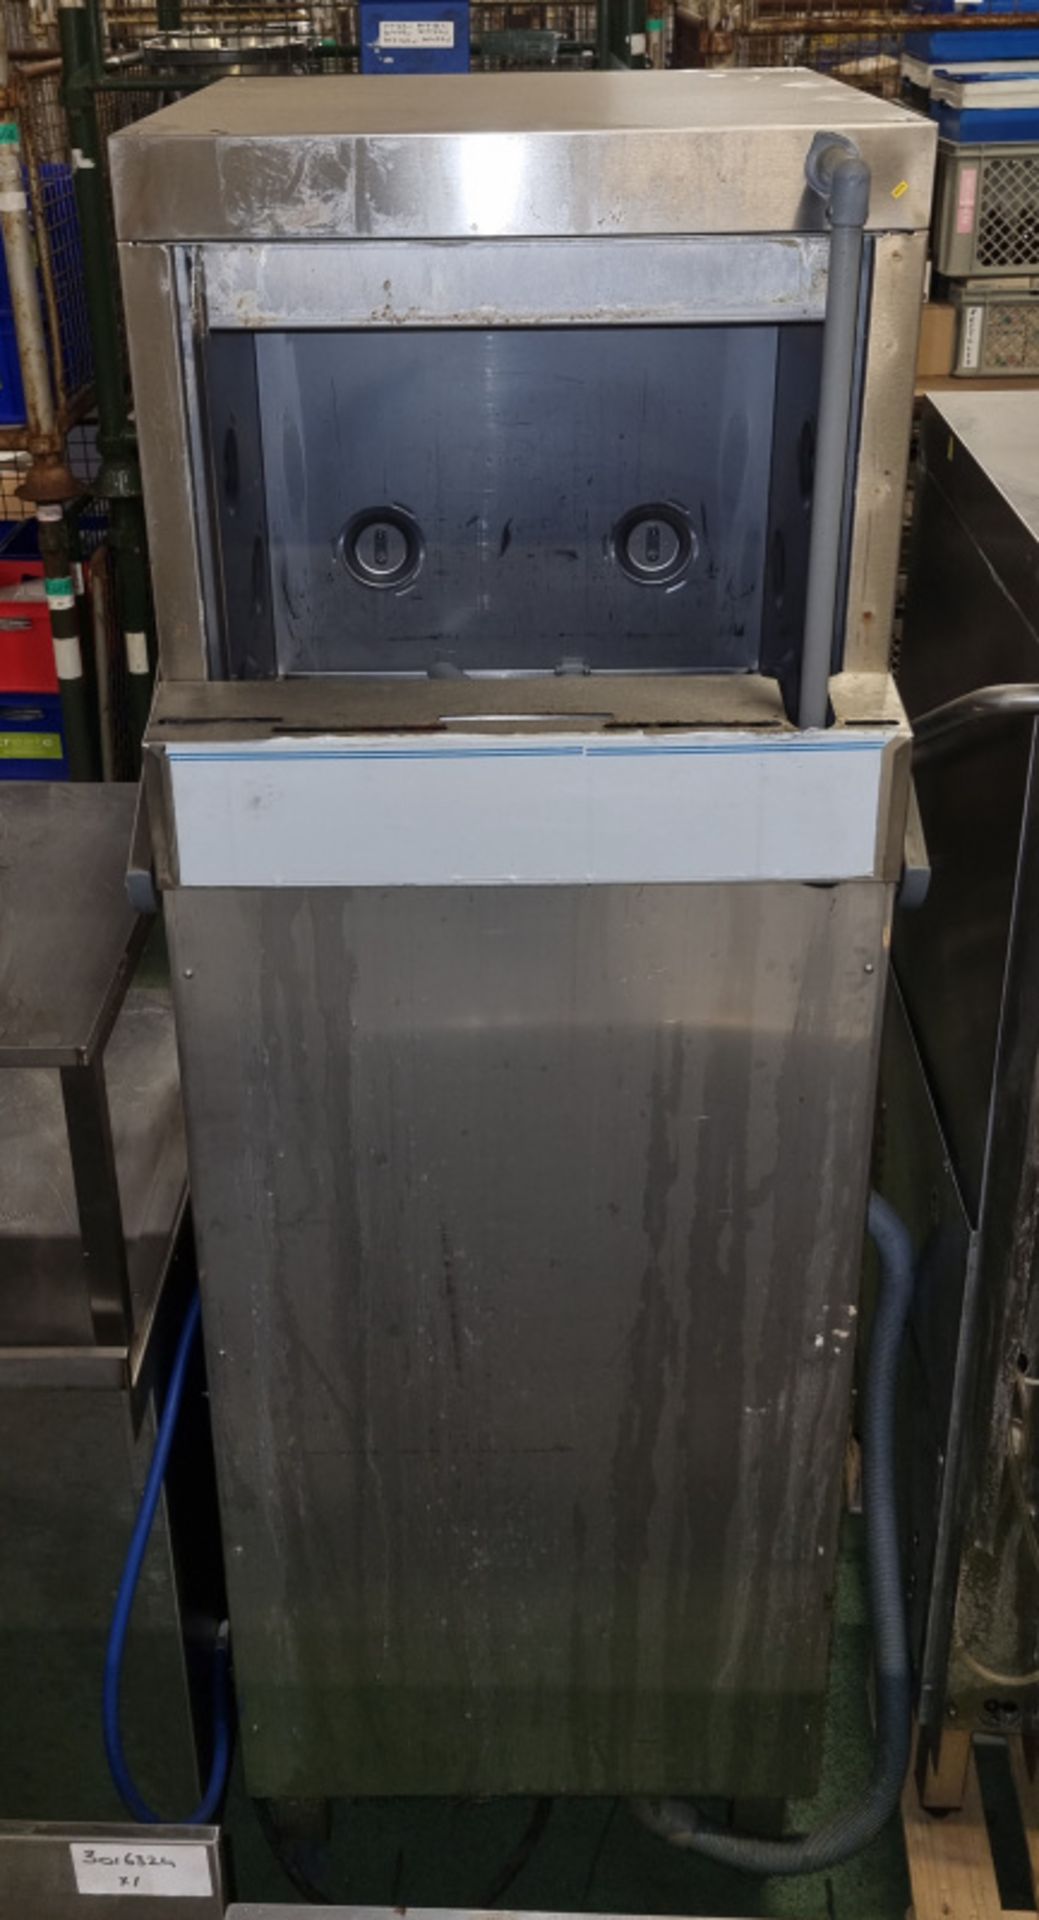 Winterhalter GS 502 pass through dishwasher - L70 x D75 x H185 (open) - Image 4 of 4